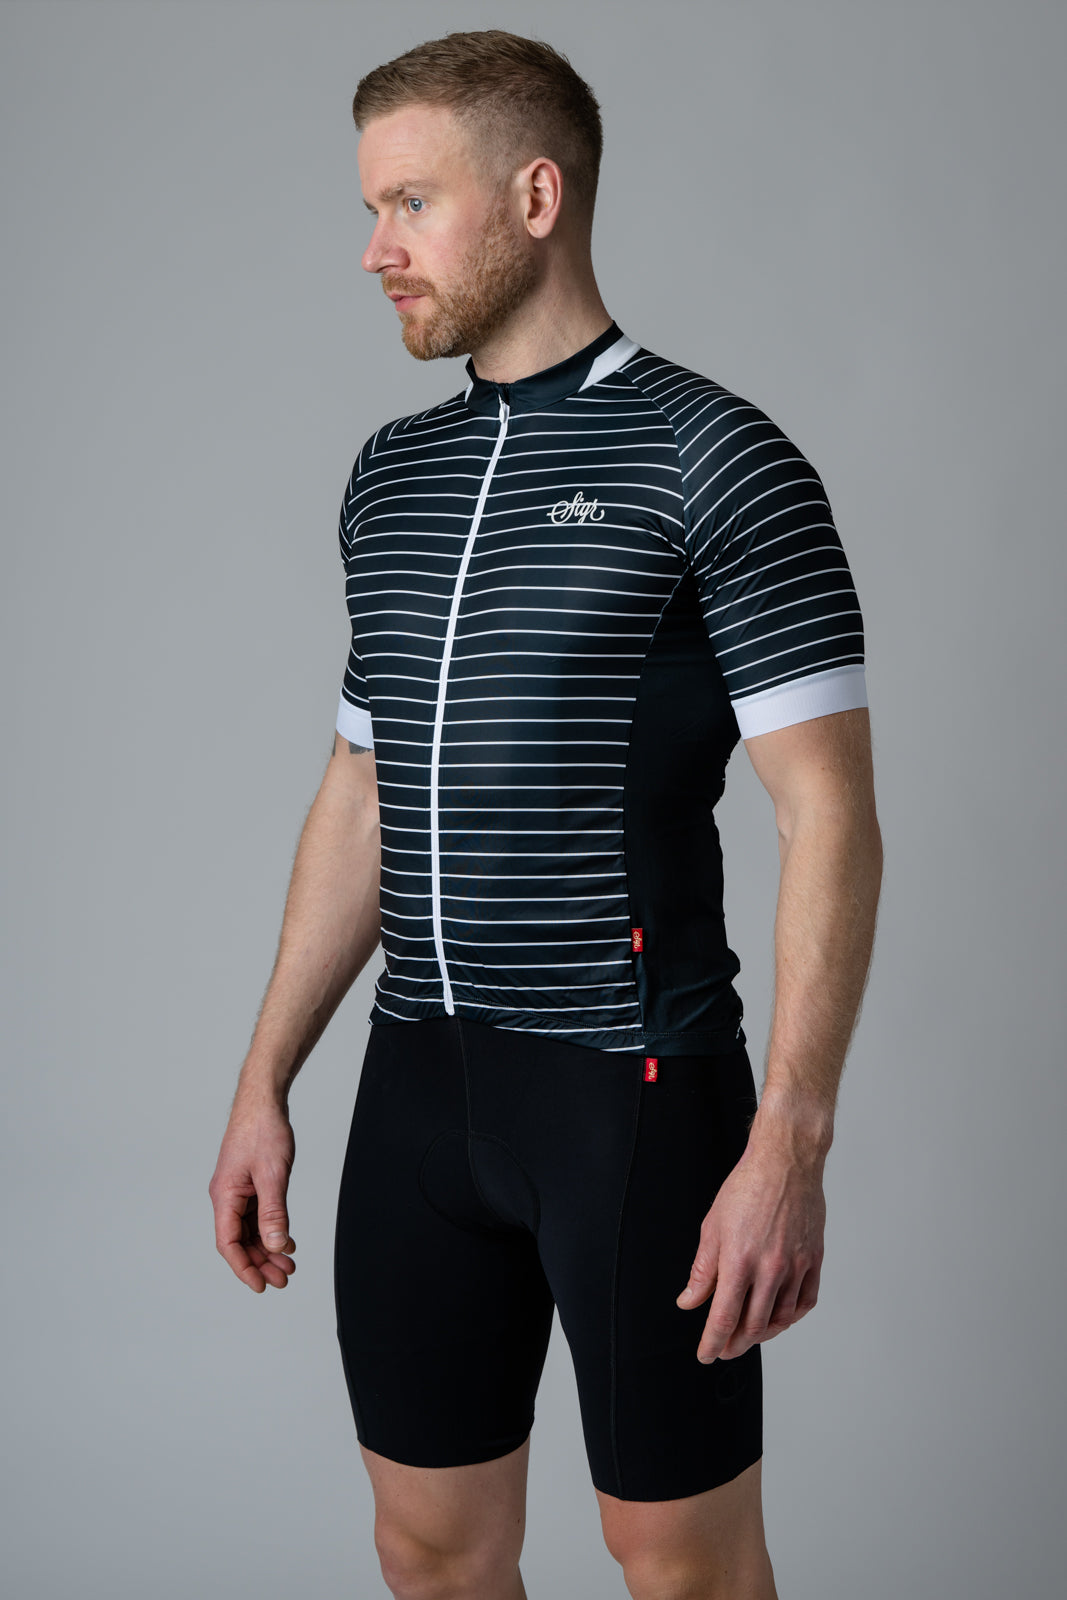 Man modelling a black and white striped 'Black Horizon' cycling jersey